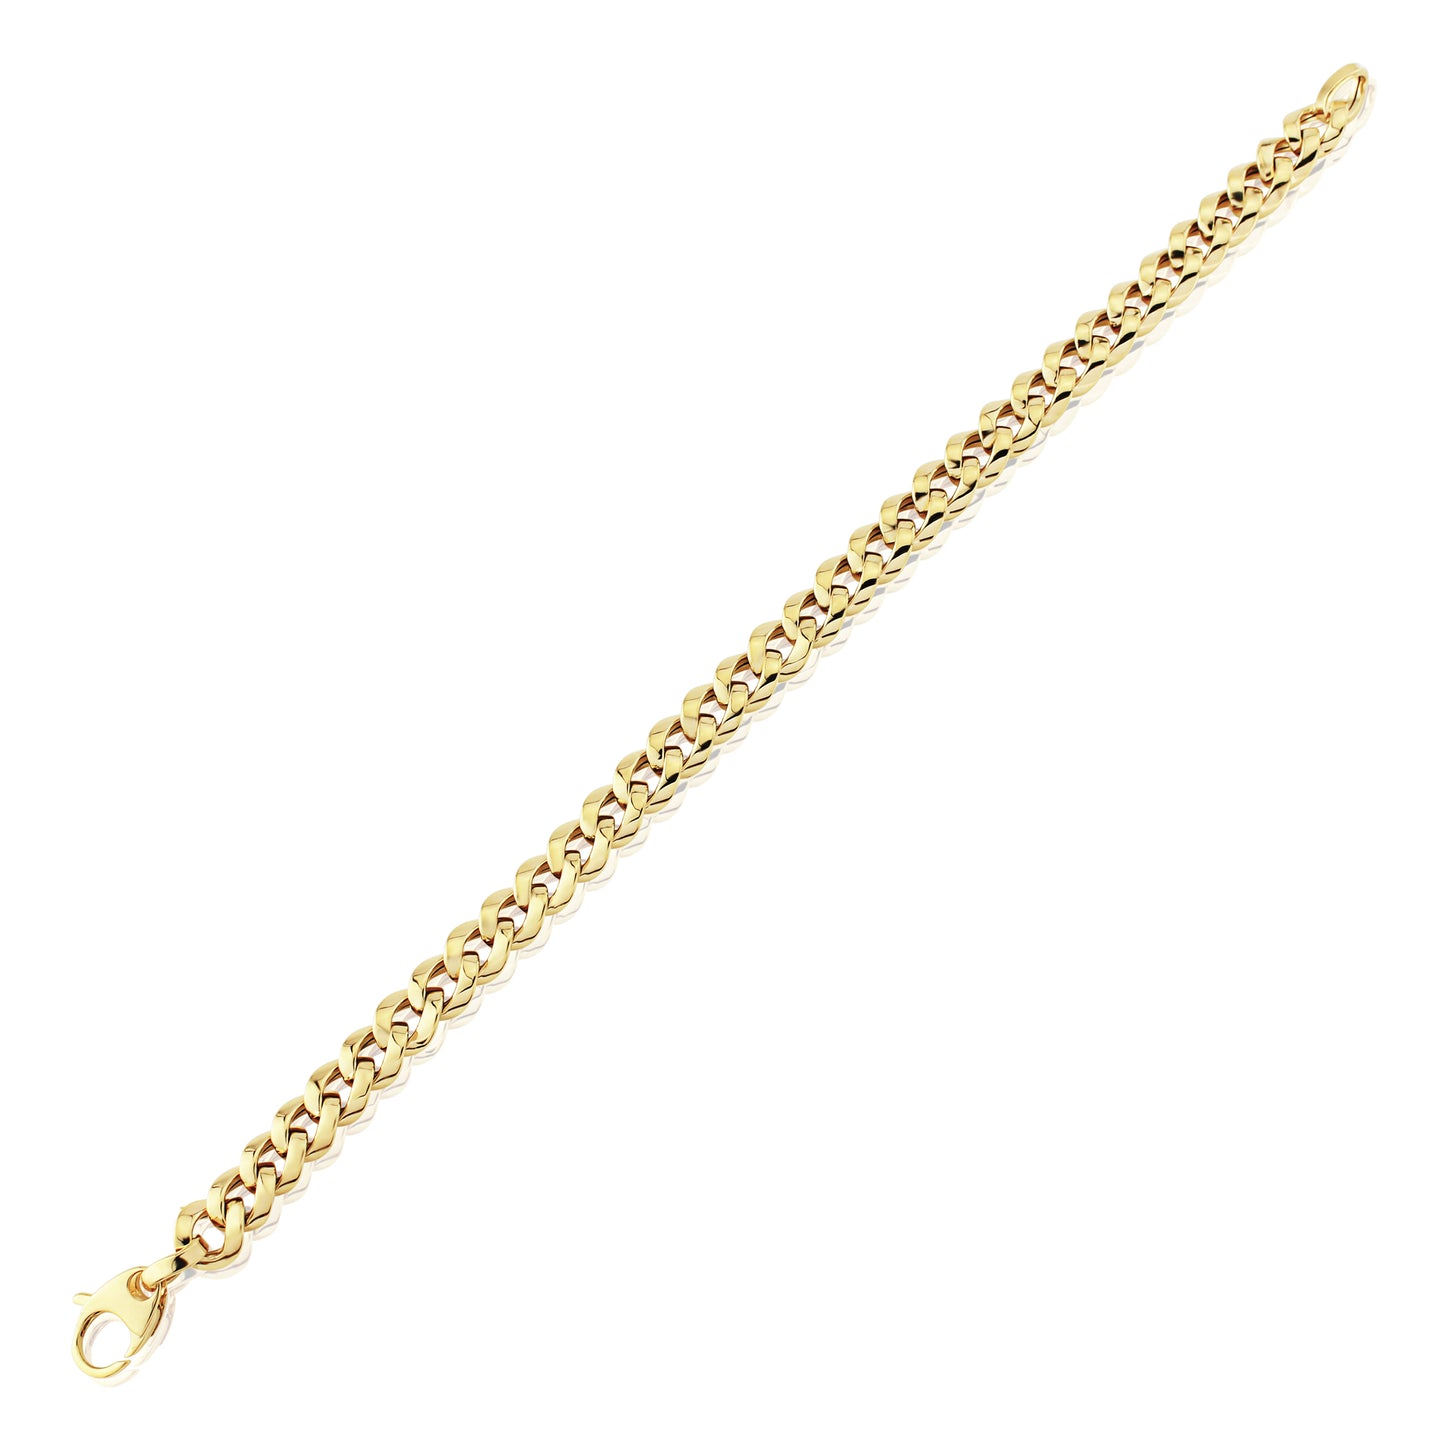 Ladies 9ct Gold  6.5mm Graduated Curb Link Bracelet 7.5" - CNNR02957